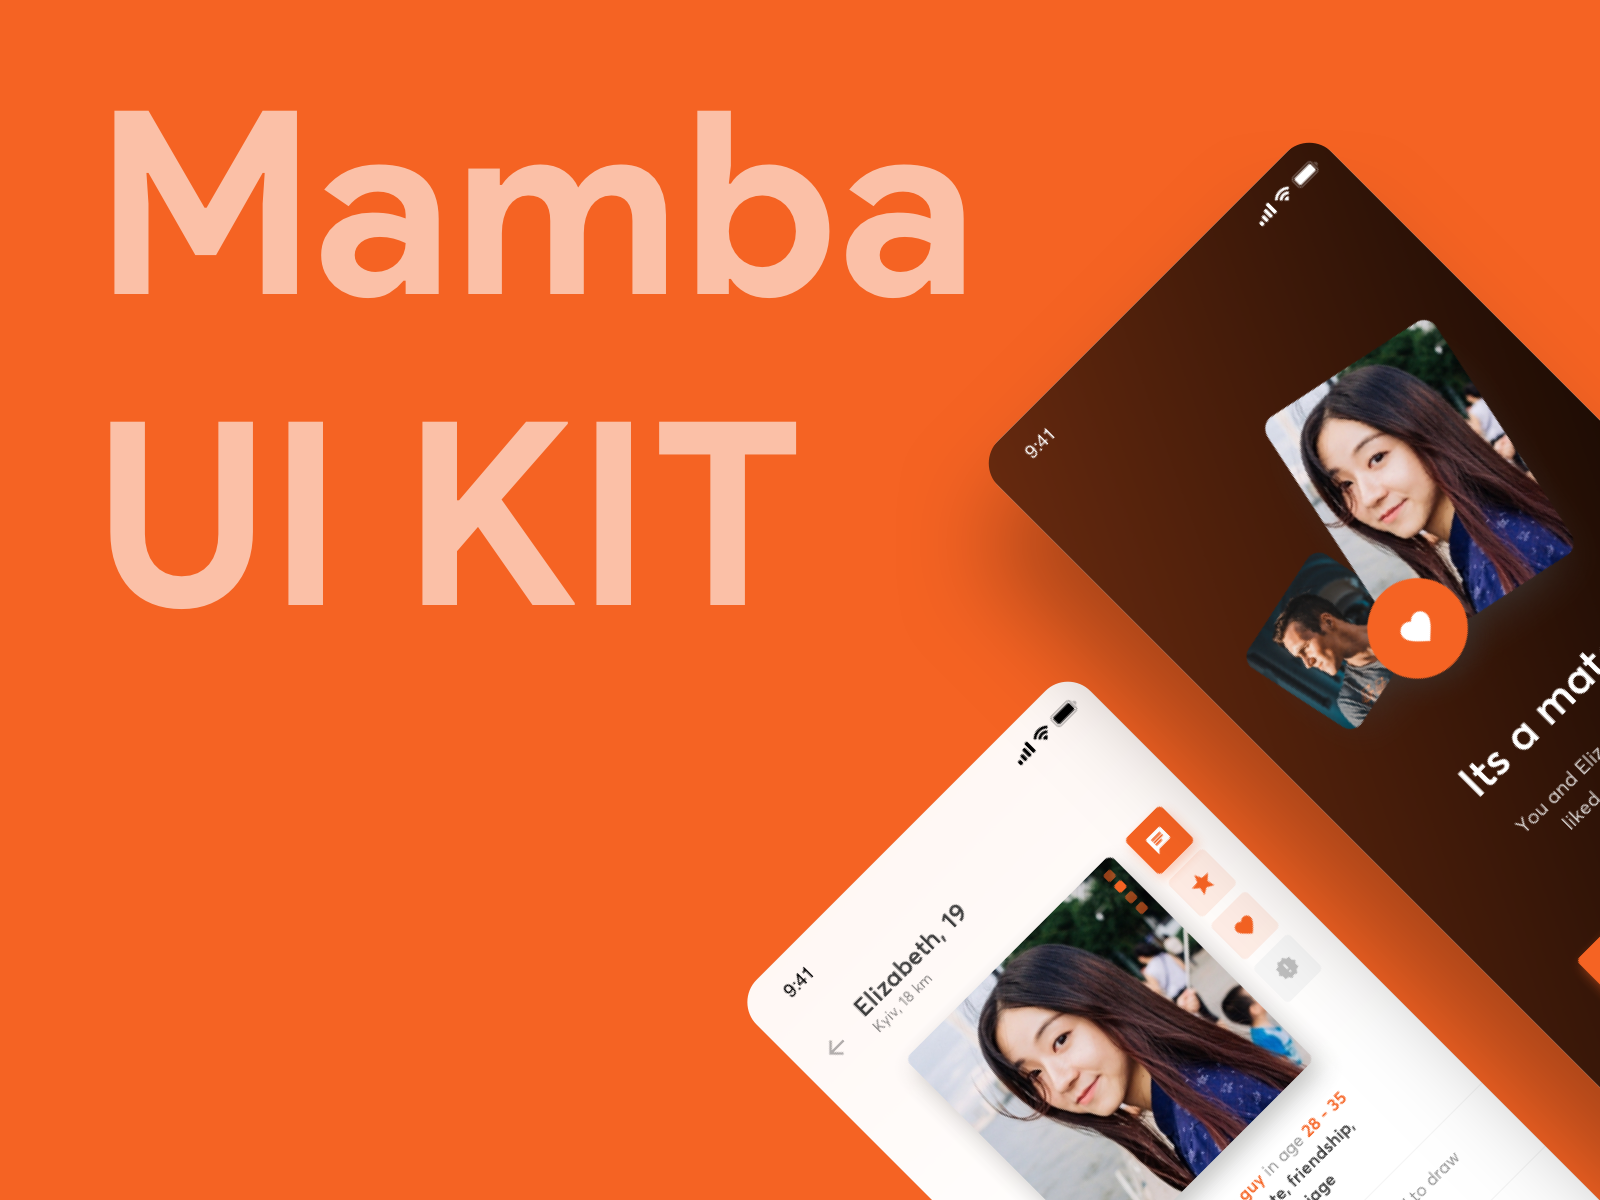 Mamba - Dating App by Mamba